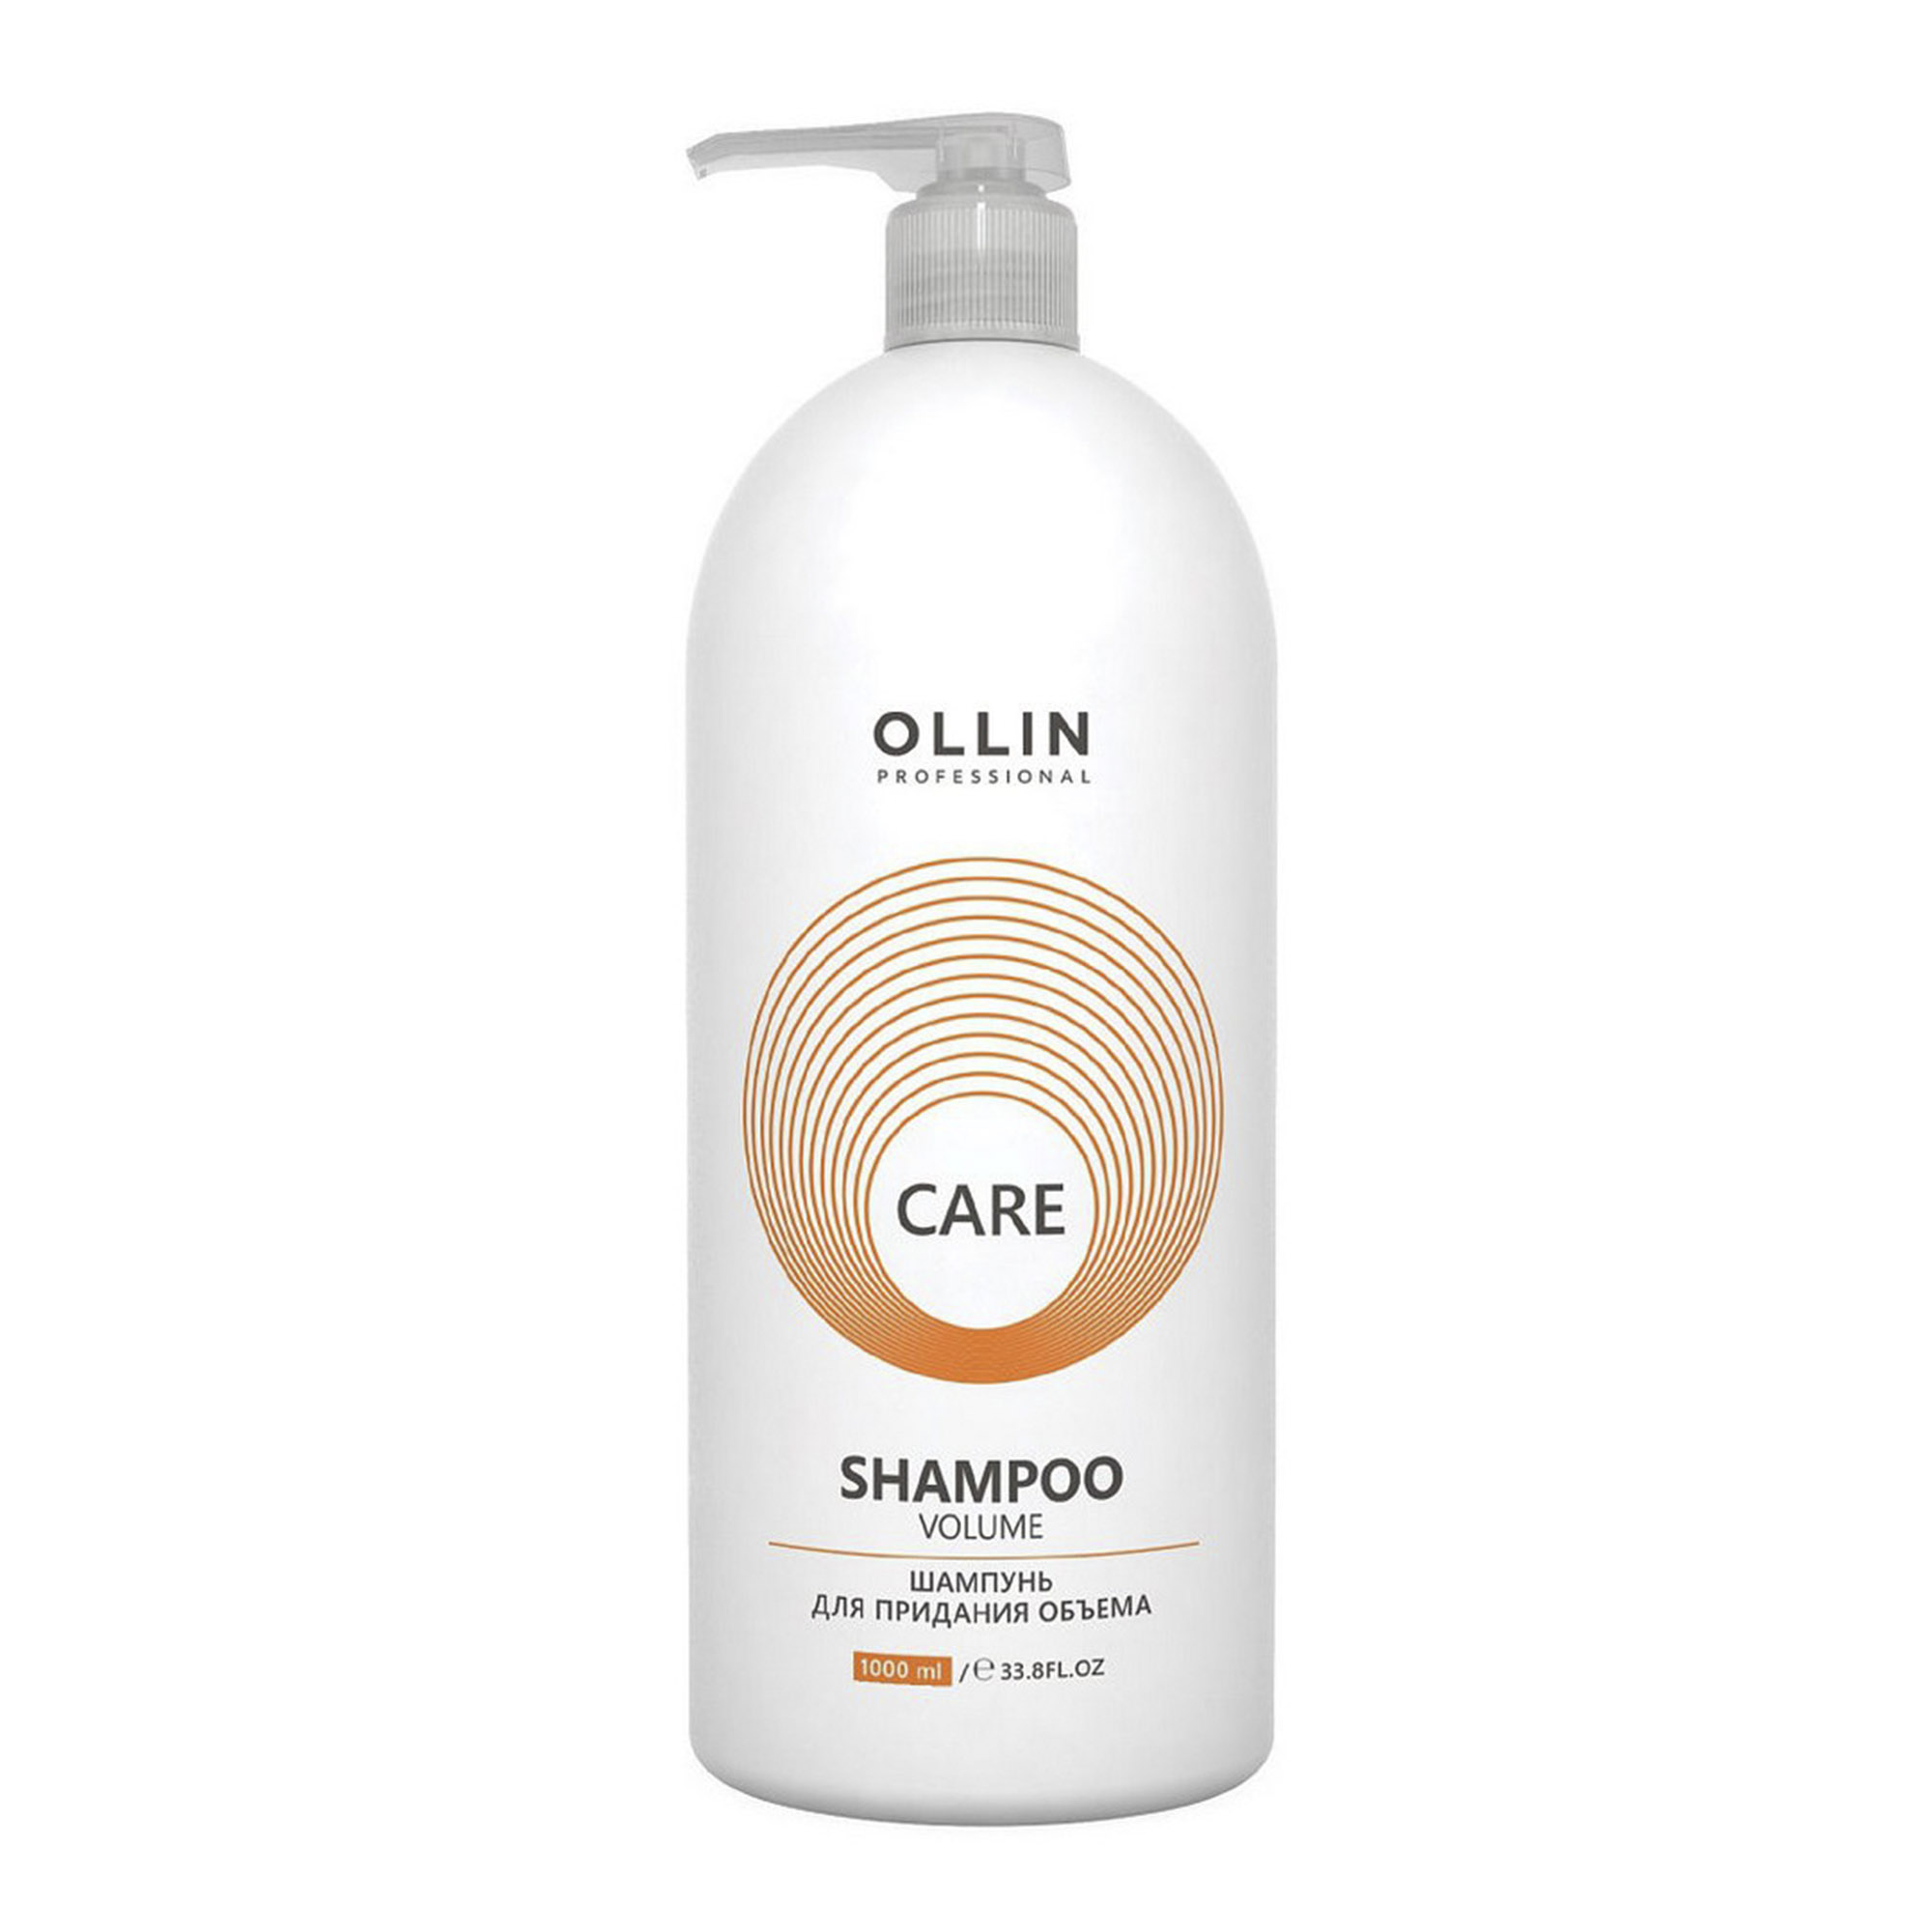 Шампунь Ollin Professional Care Volume для придания объема 1 л шампунь для придания объема volume shampoo ollin care 395379 250 мл